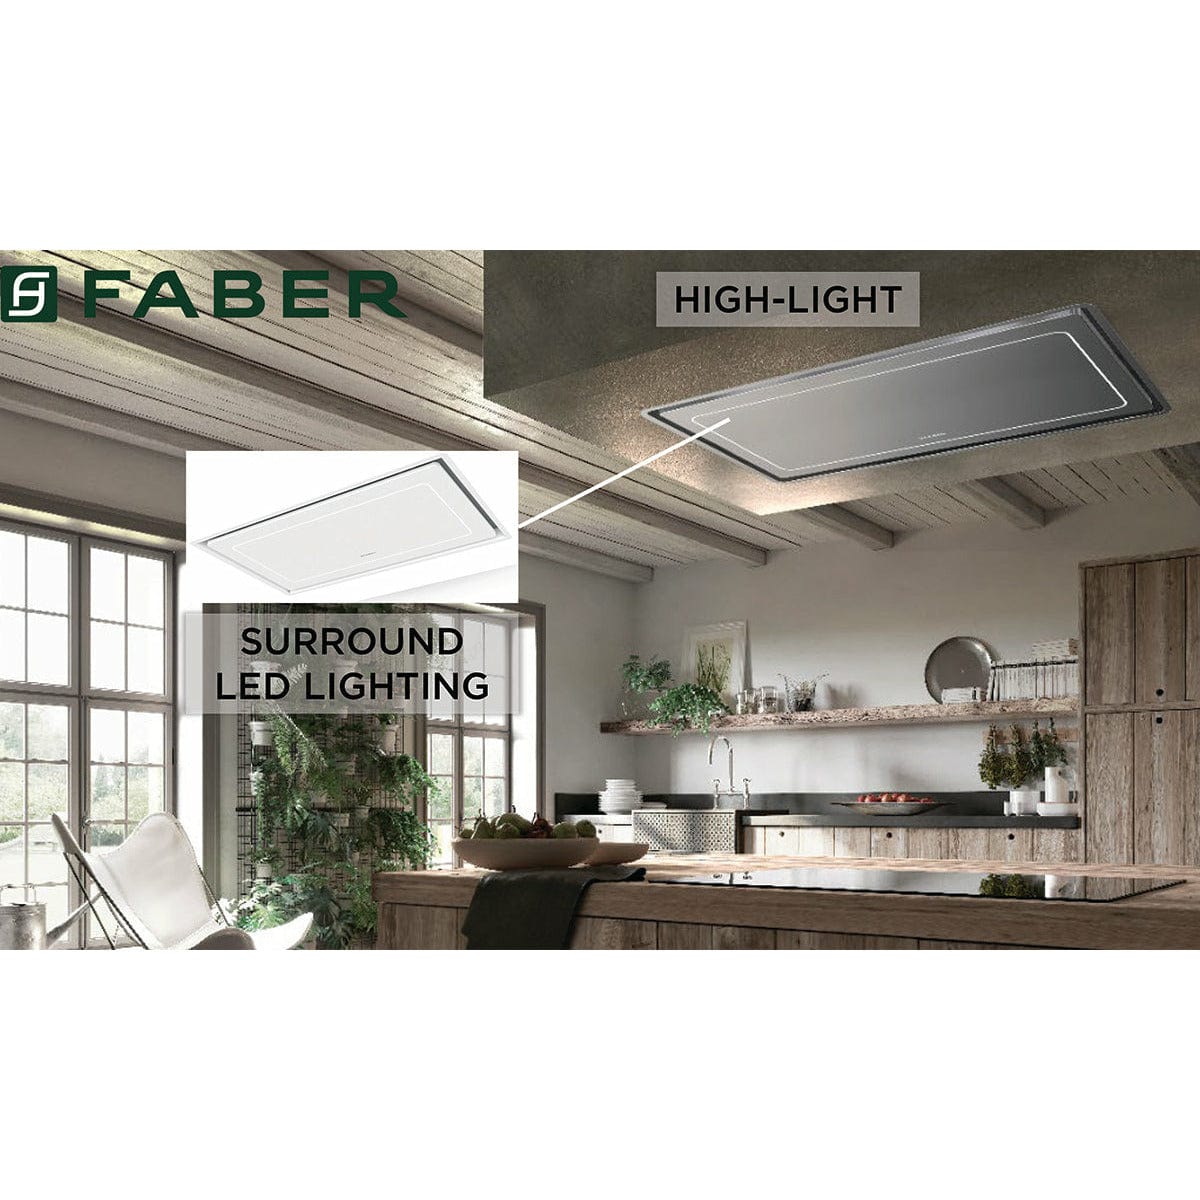 FABER High-Light Stainless Steel Hood - HILTIS36SSNB Hoods HILTIS36SSNB Luxury Appliances Direct